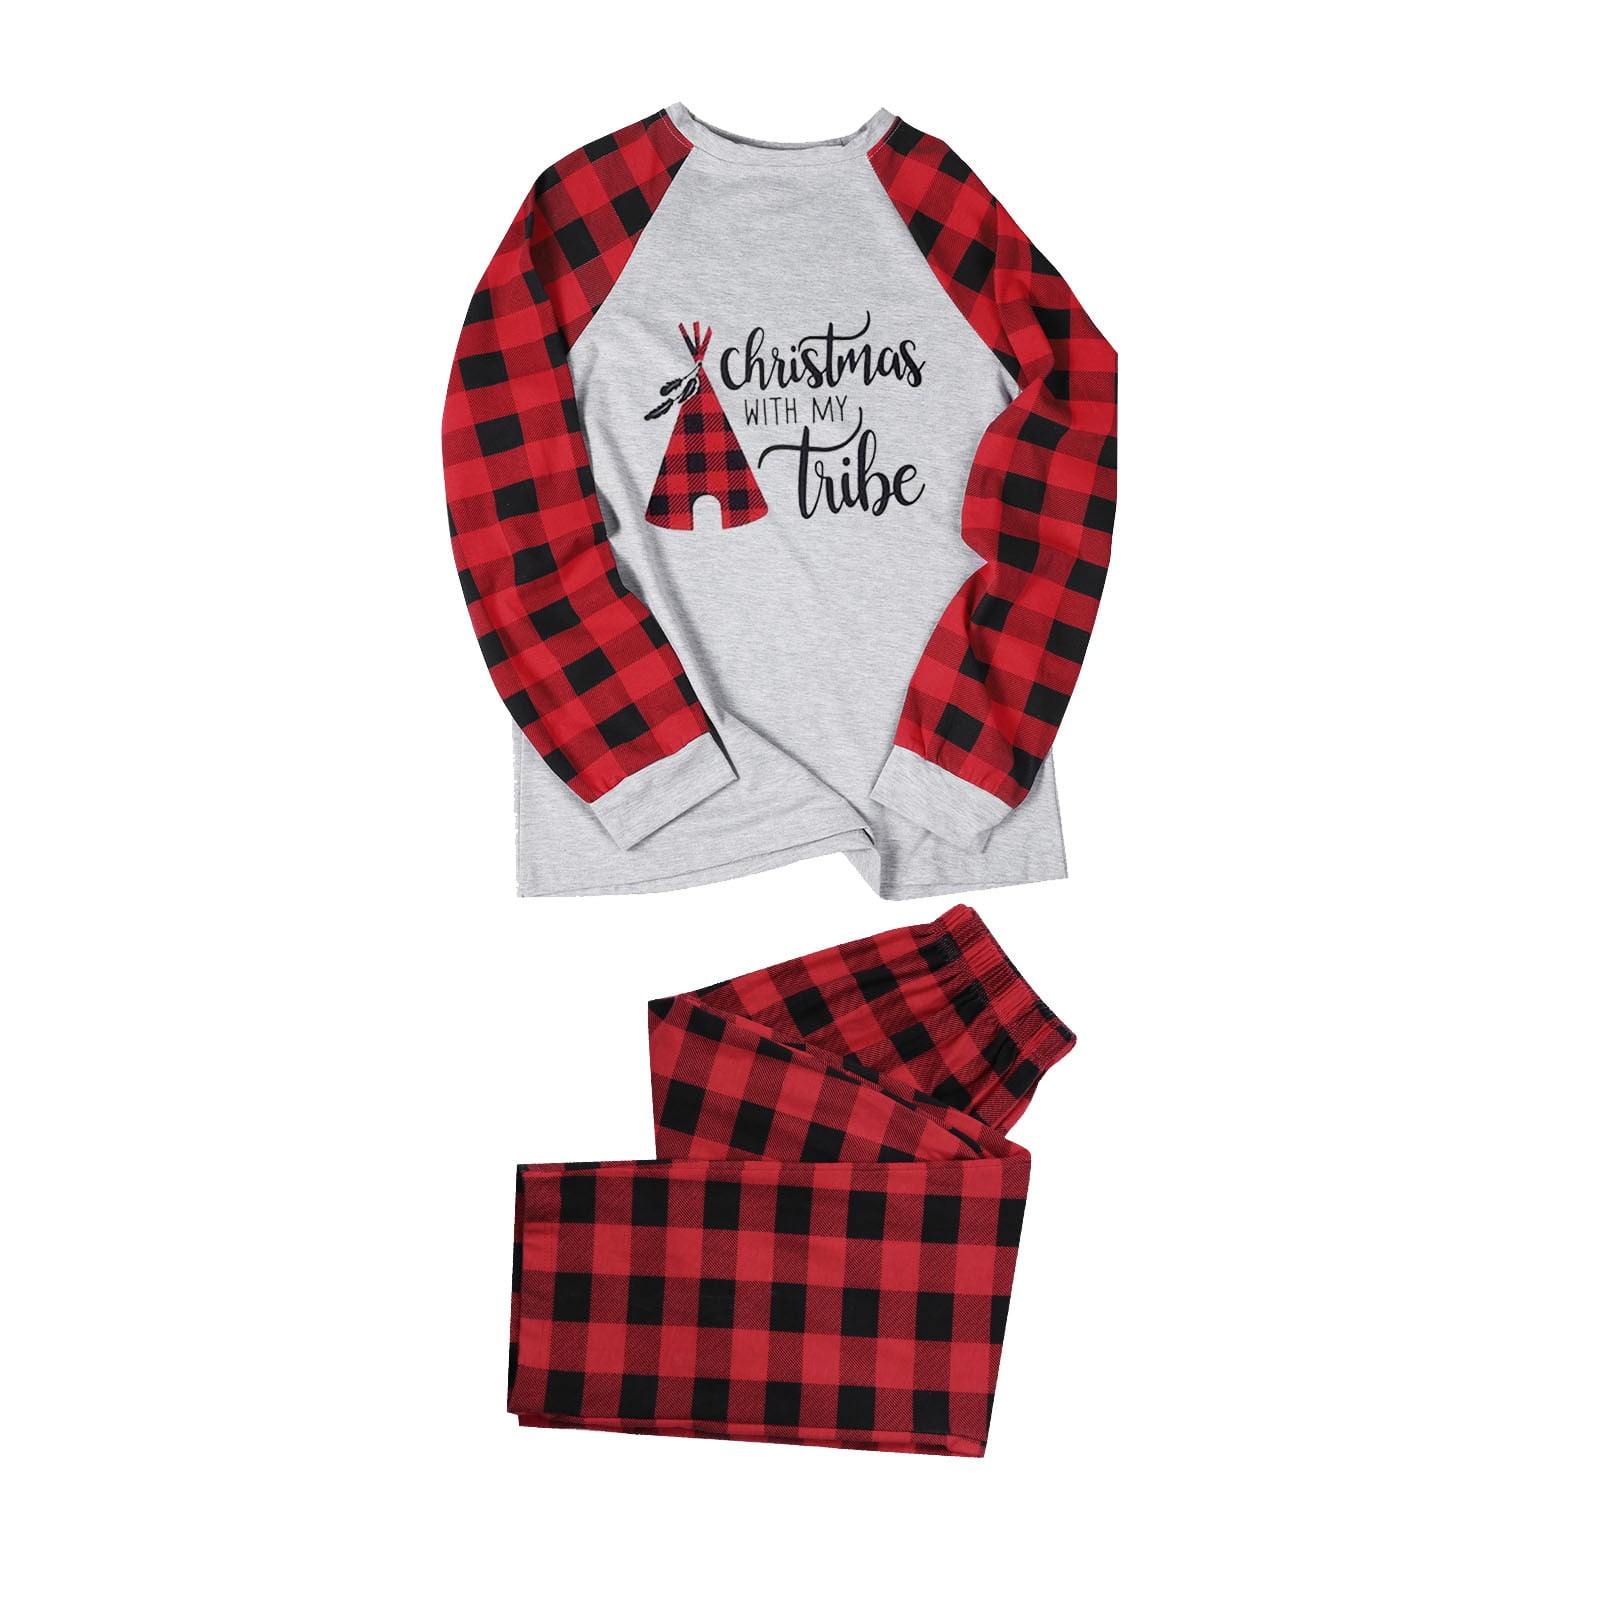 Lisingtool pajamas for women set Matching Family Pajamas Sets Christmas  Sleepwear Plaid Printed Long Sleeve Tee And Bottom Loungewear (Dad)  matching set Grey 